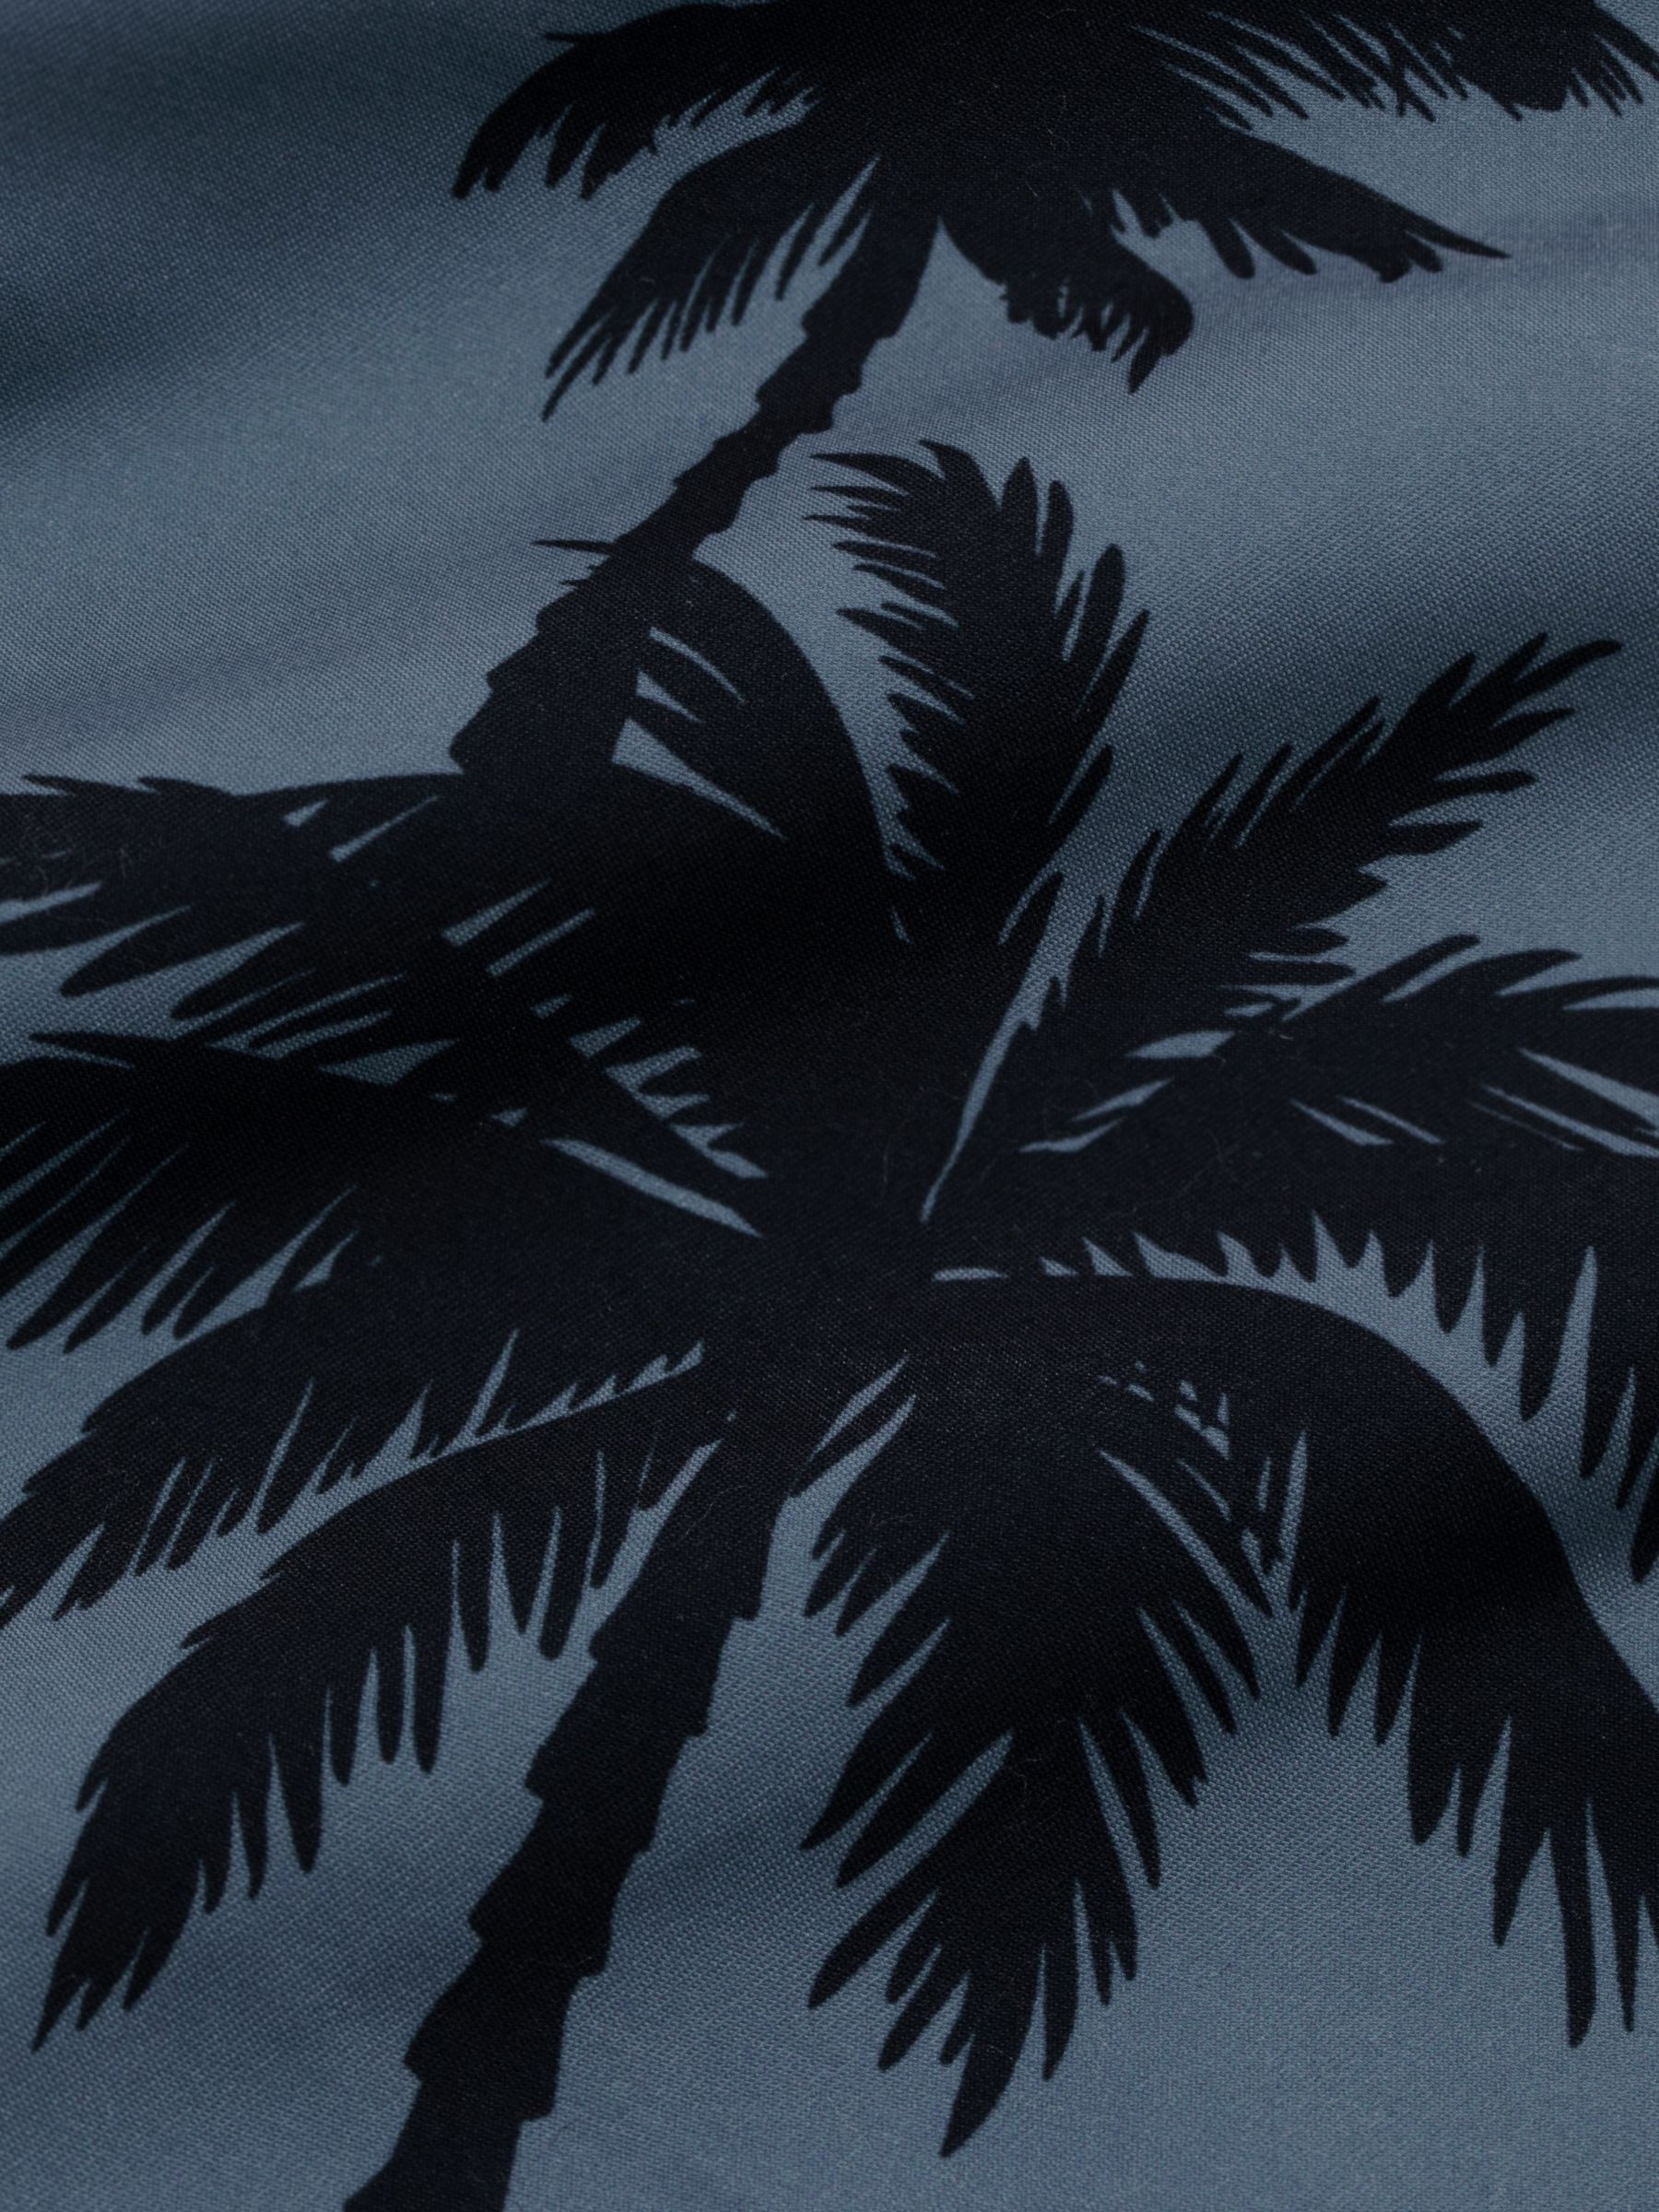 Chelsea Peers Midnight Palm Print Swim Shorts, Navy/Blue, L